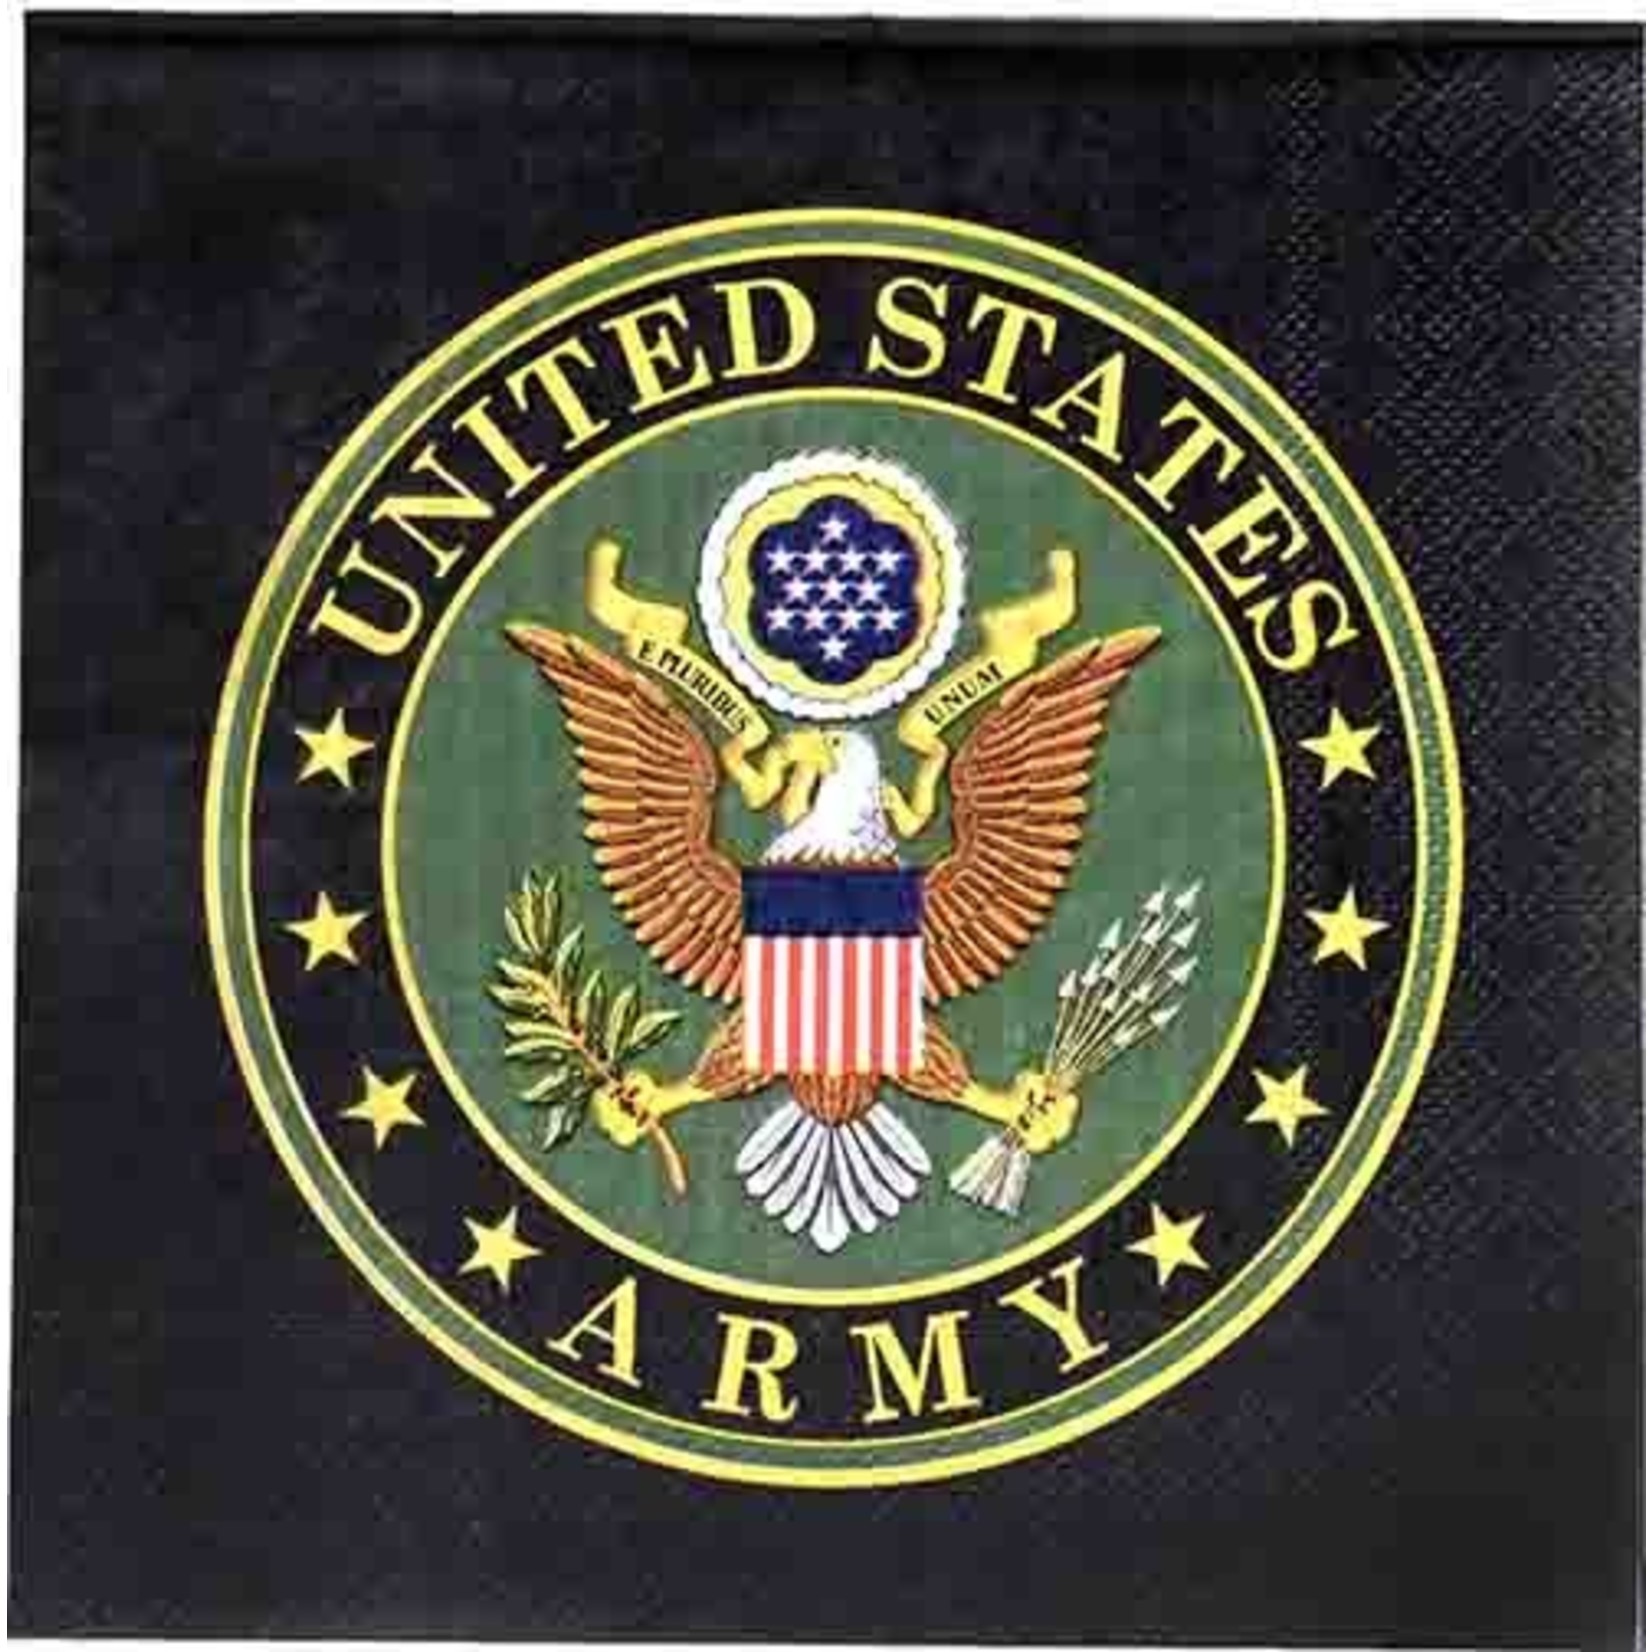 Havercamp U.S. Army Lunch Napkins - 16ct.